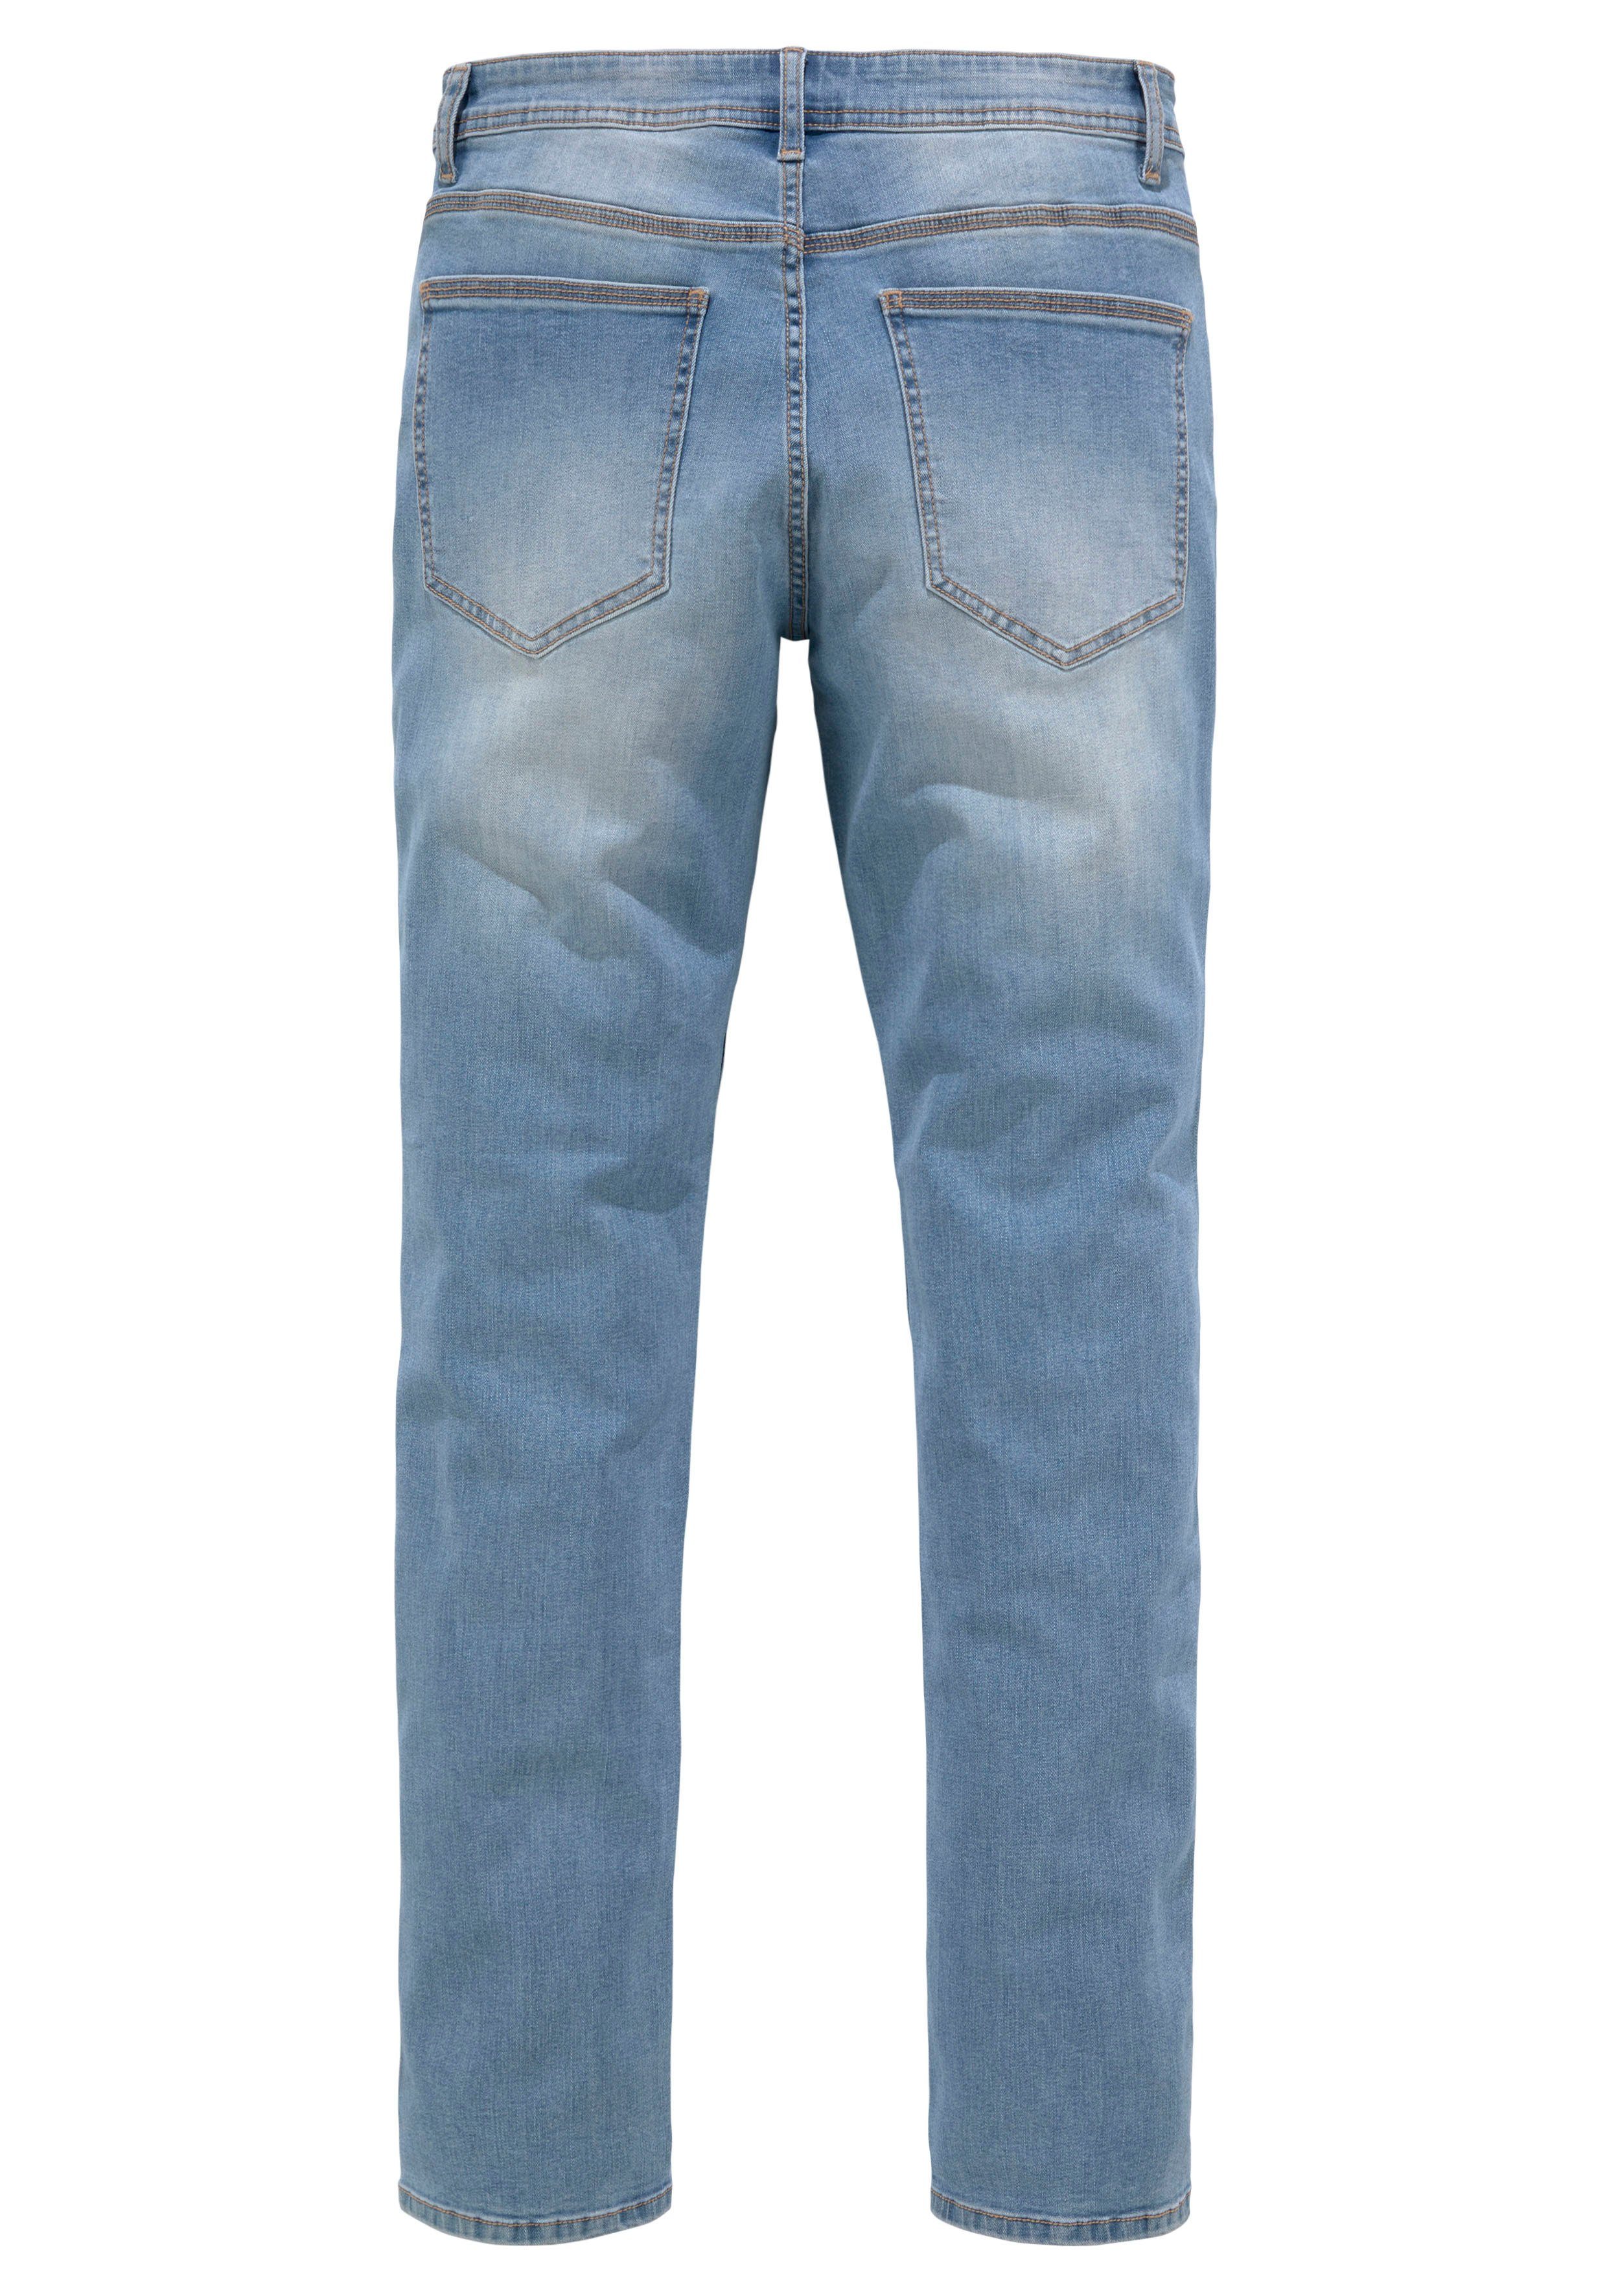 AJC Straight-Jeans mit Abriebeffekten light an Beinen den blue